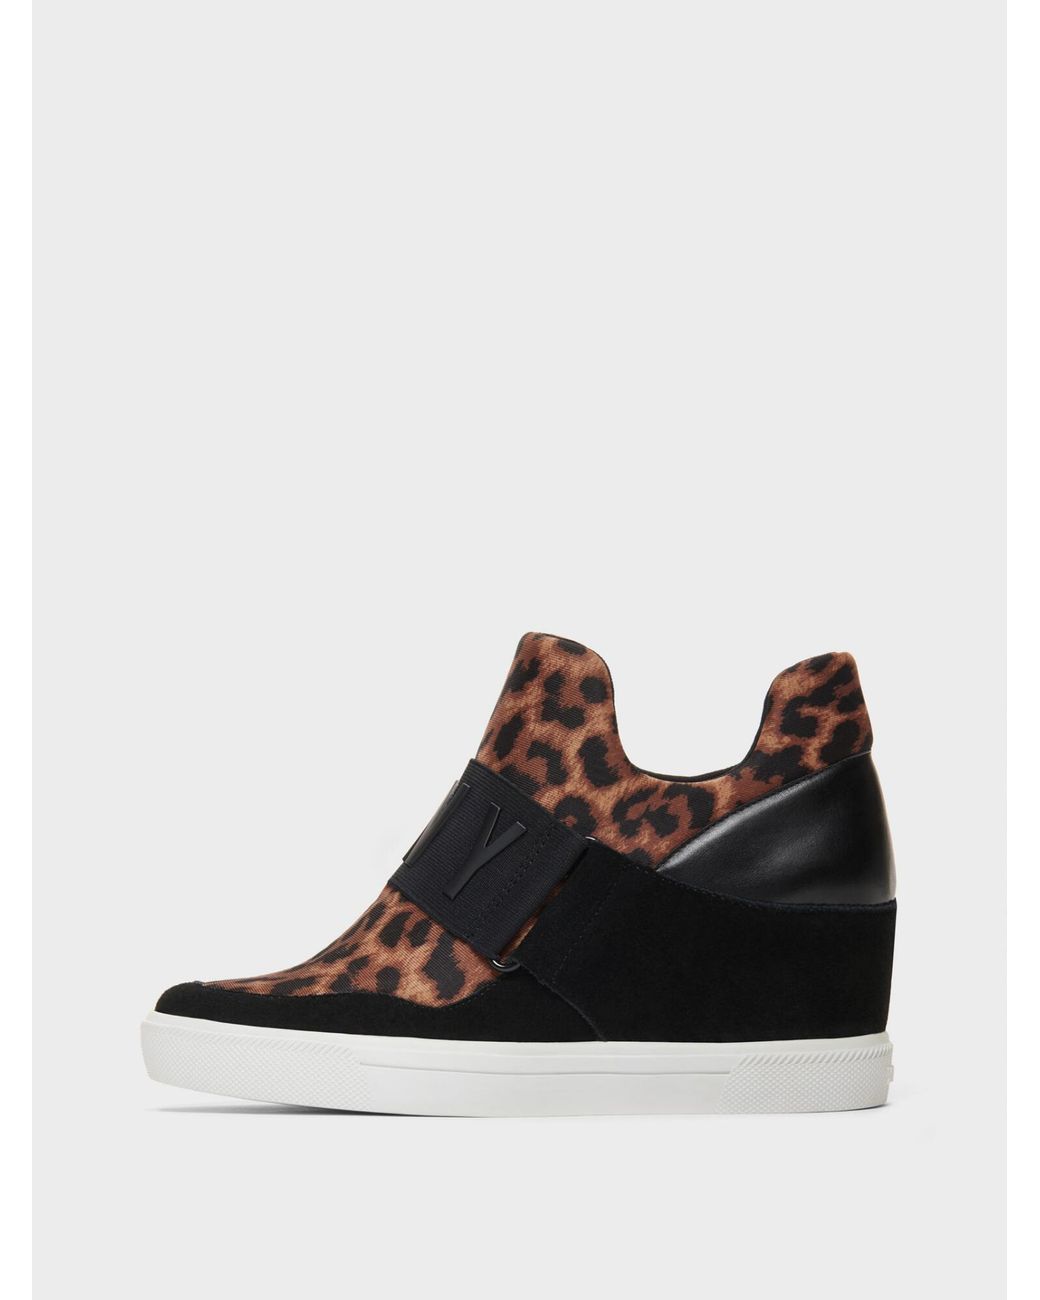 DKNY Cosmos Wedge Sneaker in Leopard 